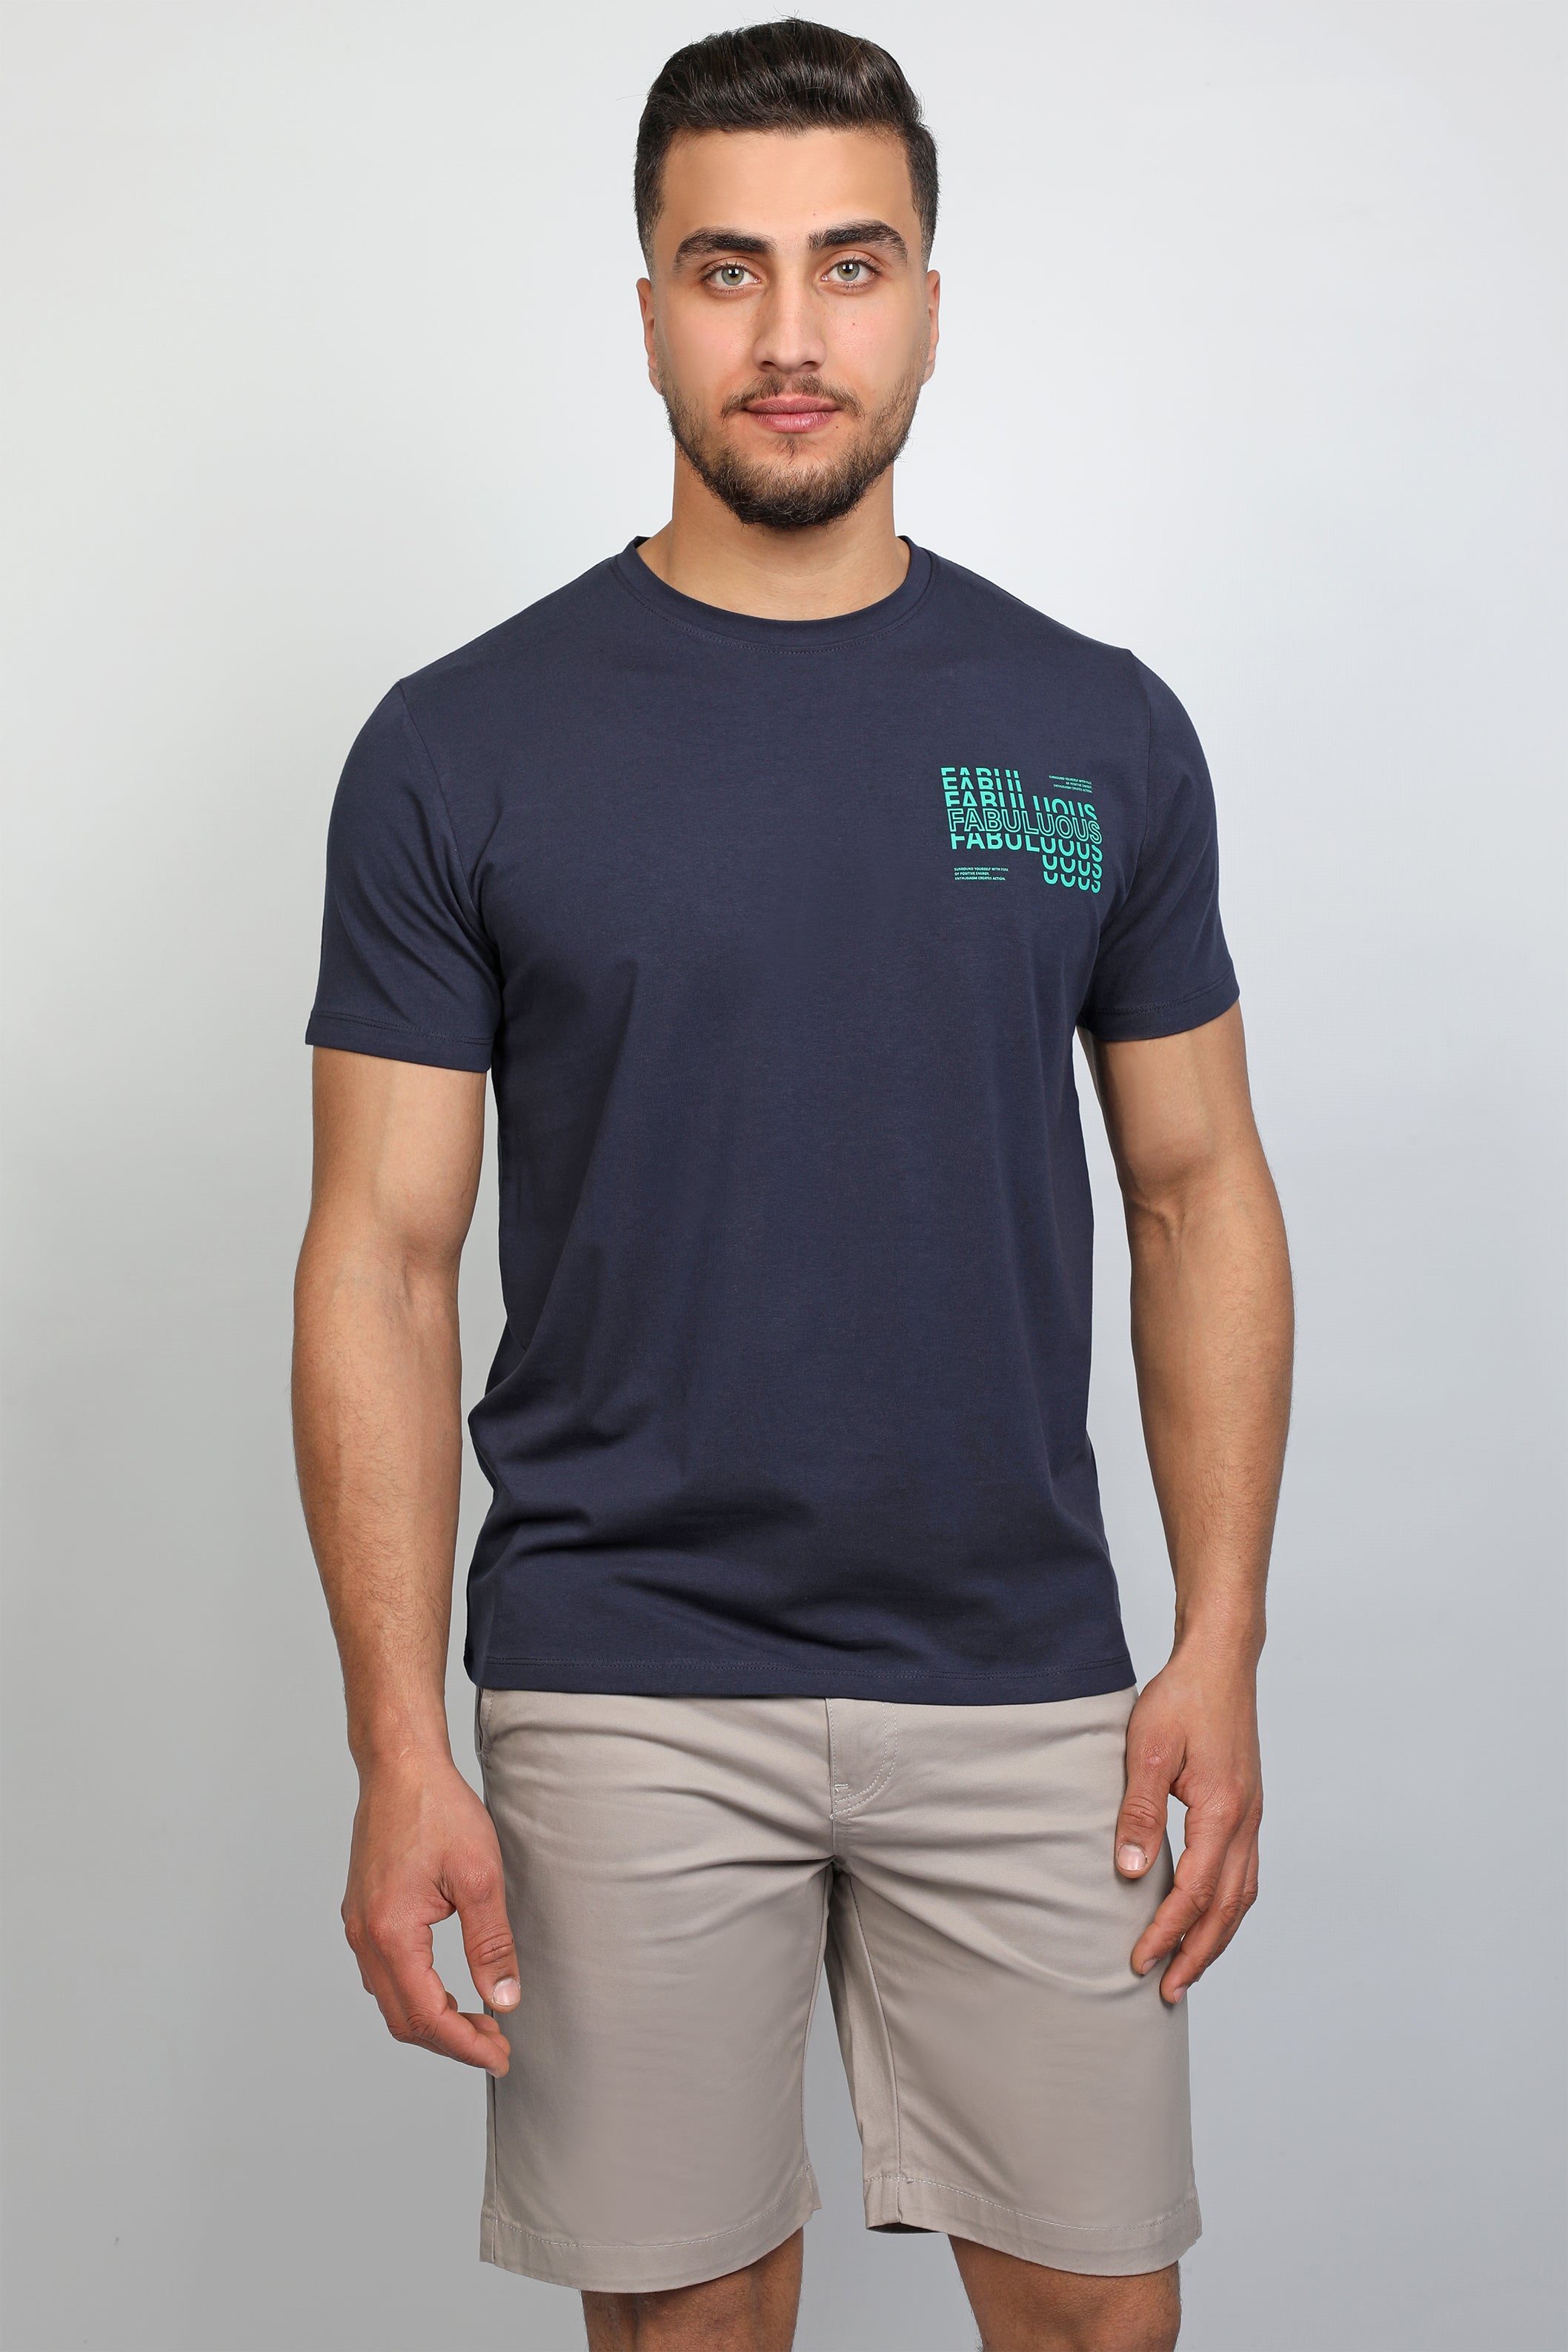 "Fabuluous" Front Designed Navy T-shirt